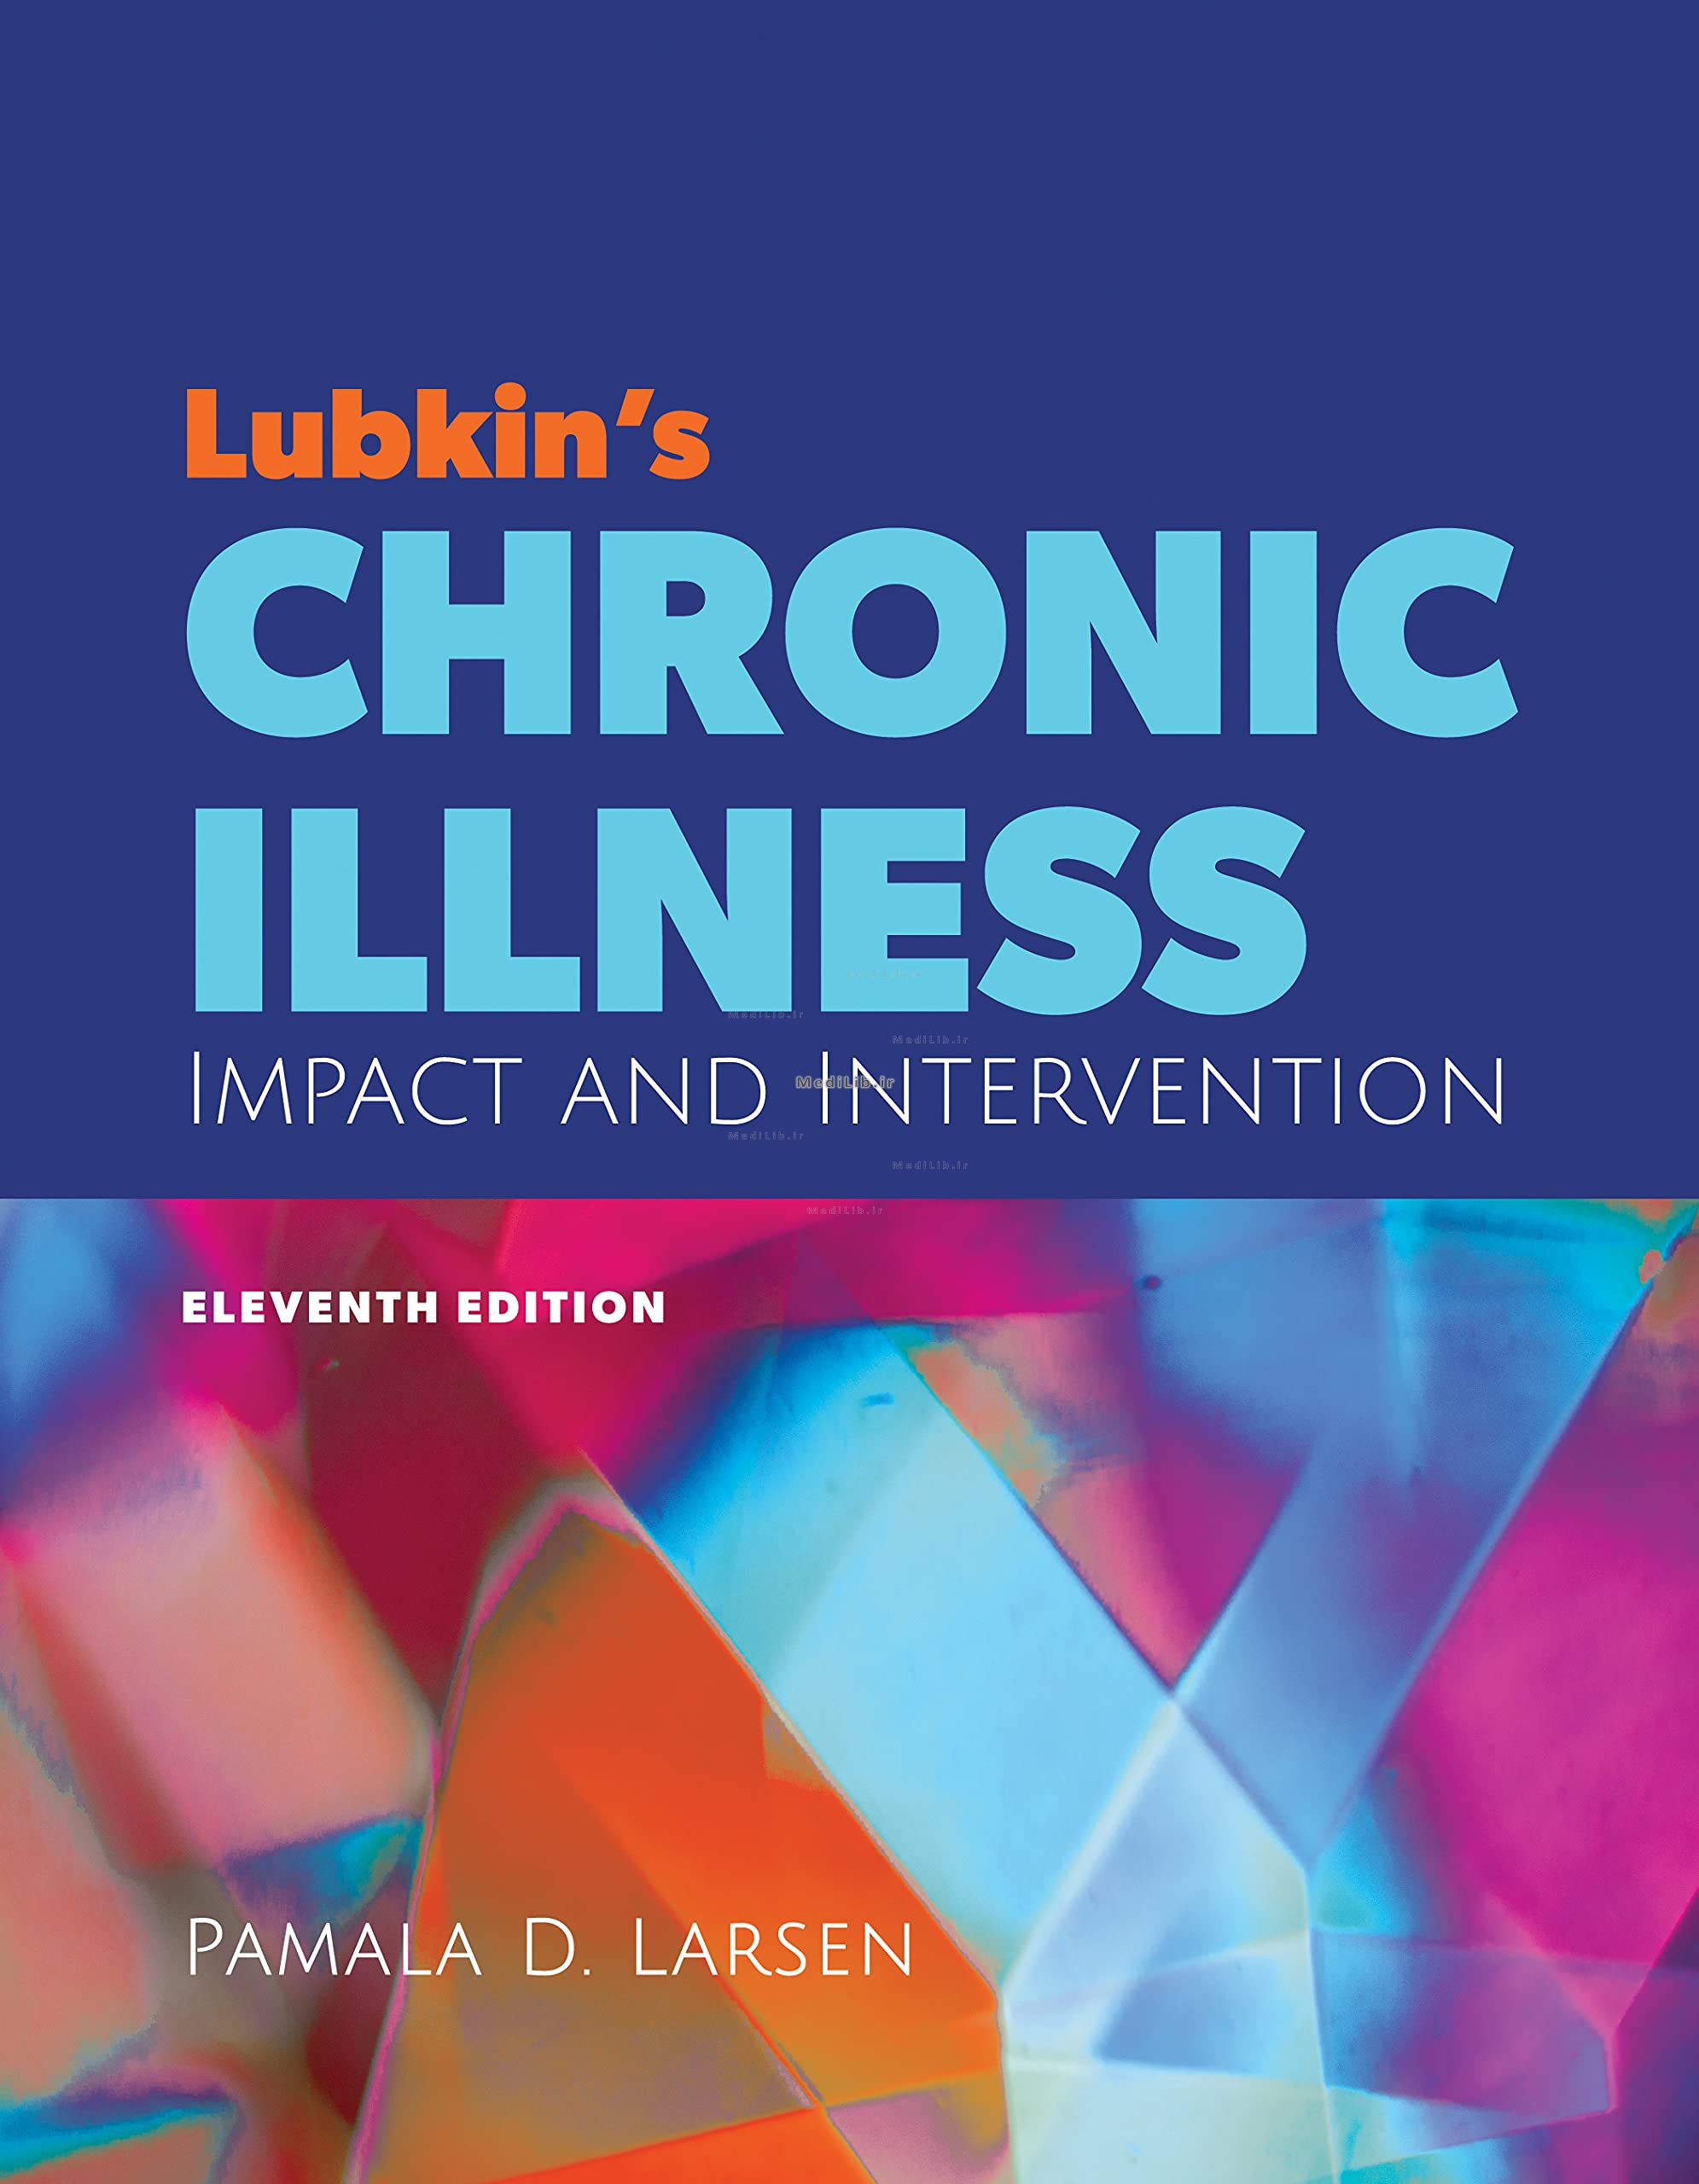 Lubkin's Chronic Illness: Impact and Intervention 11th
